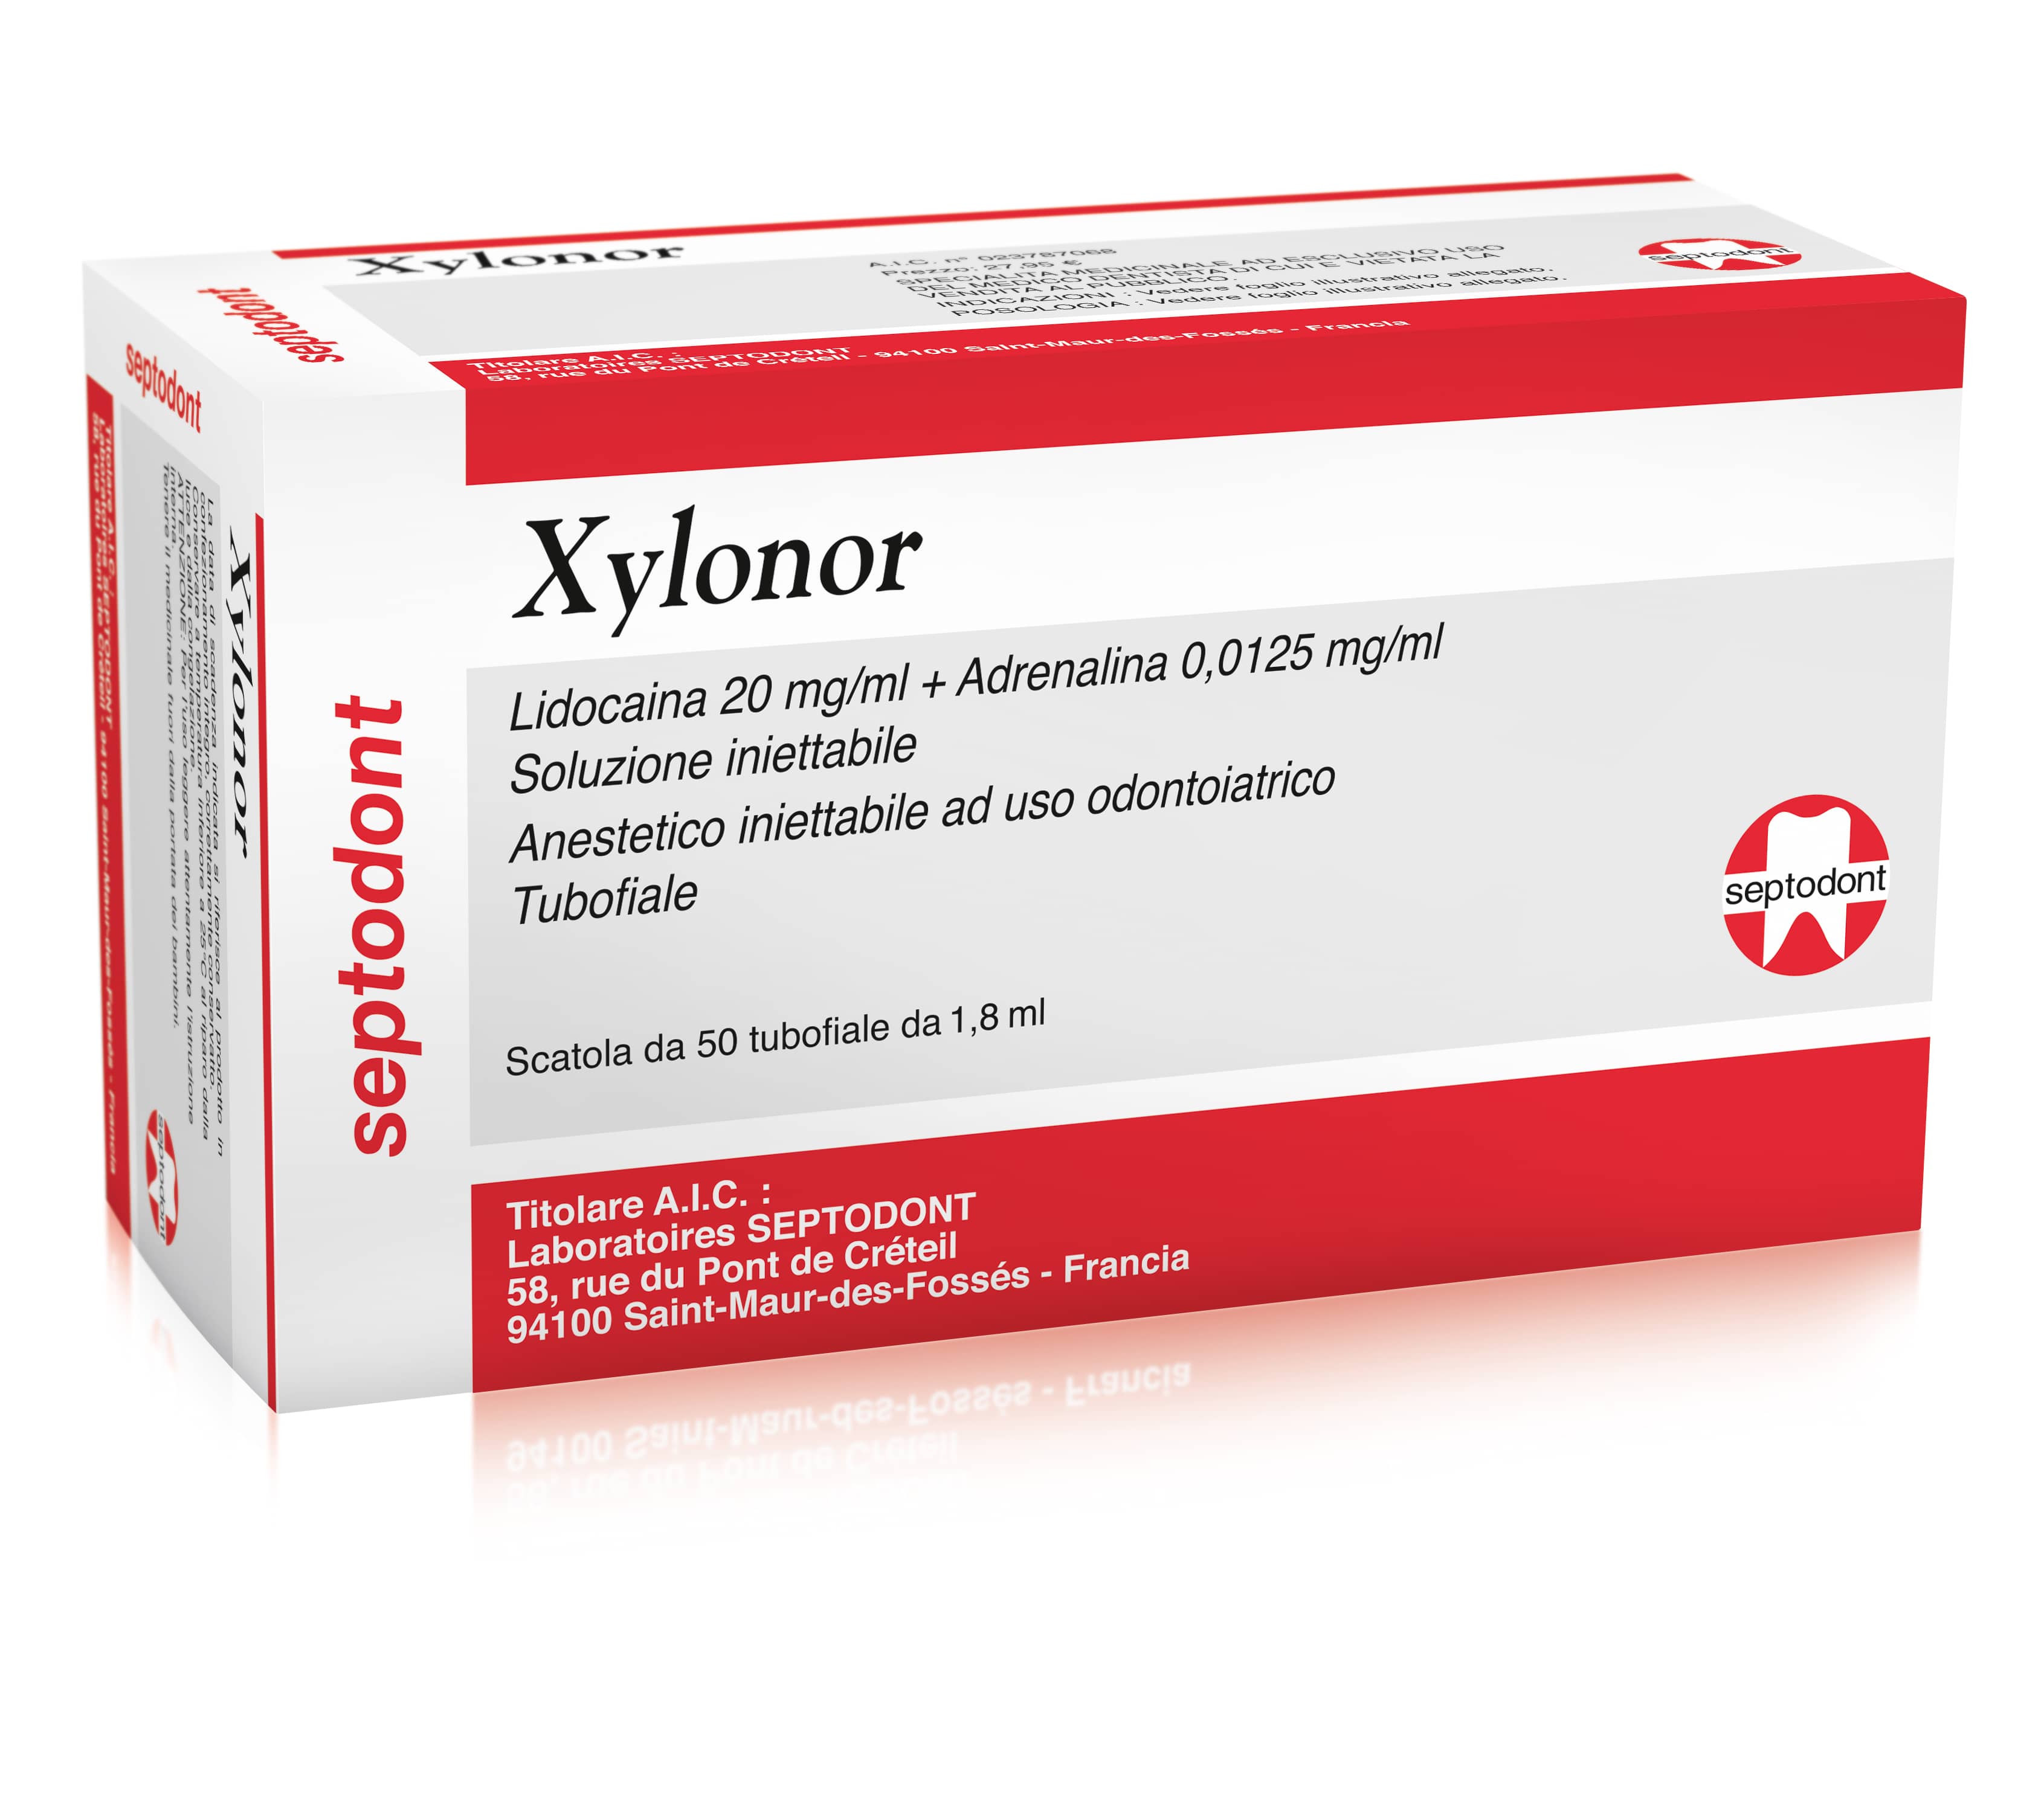 Medicamenti - Suture - Xylonor 1:80.000 tubofiala